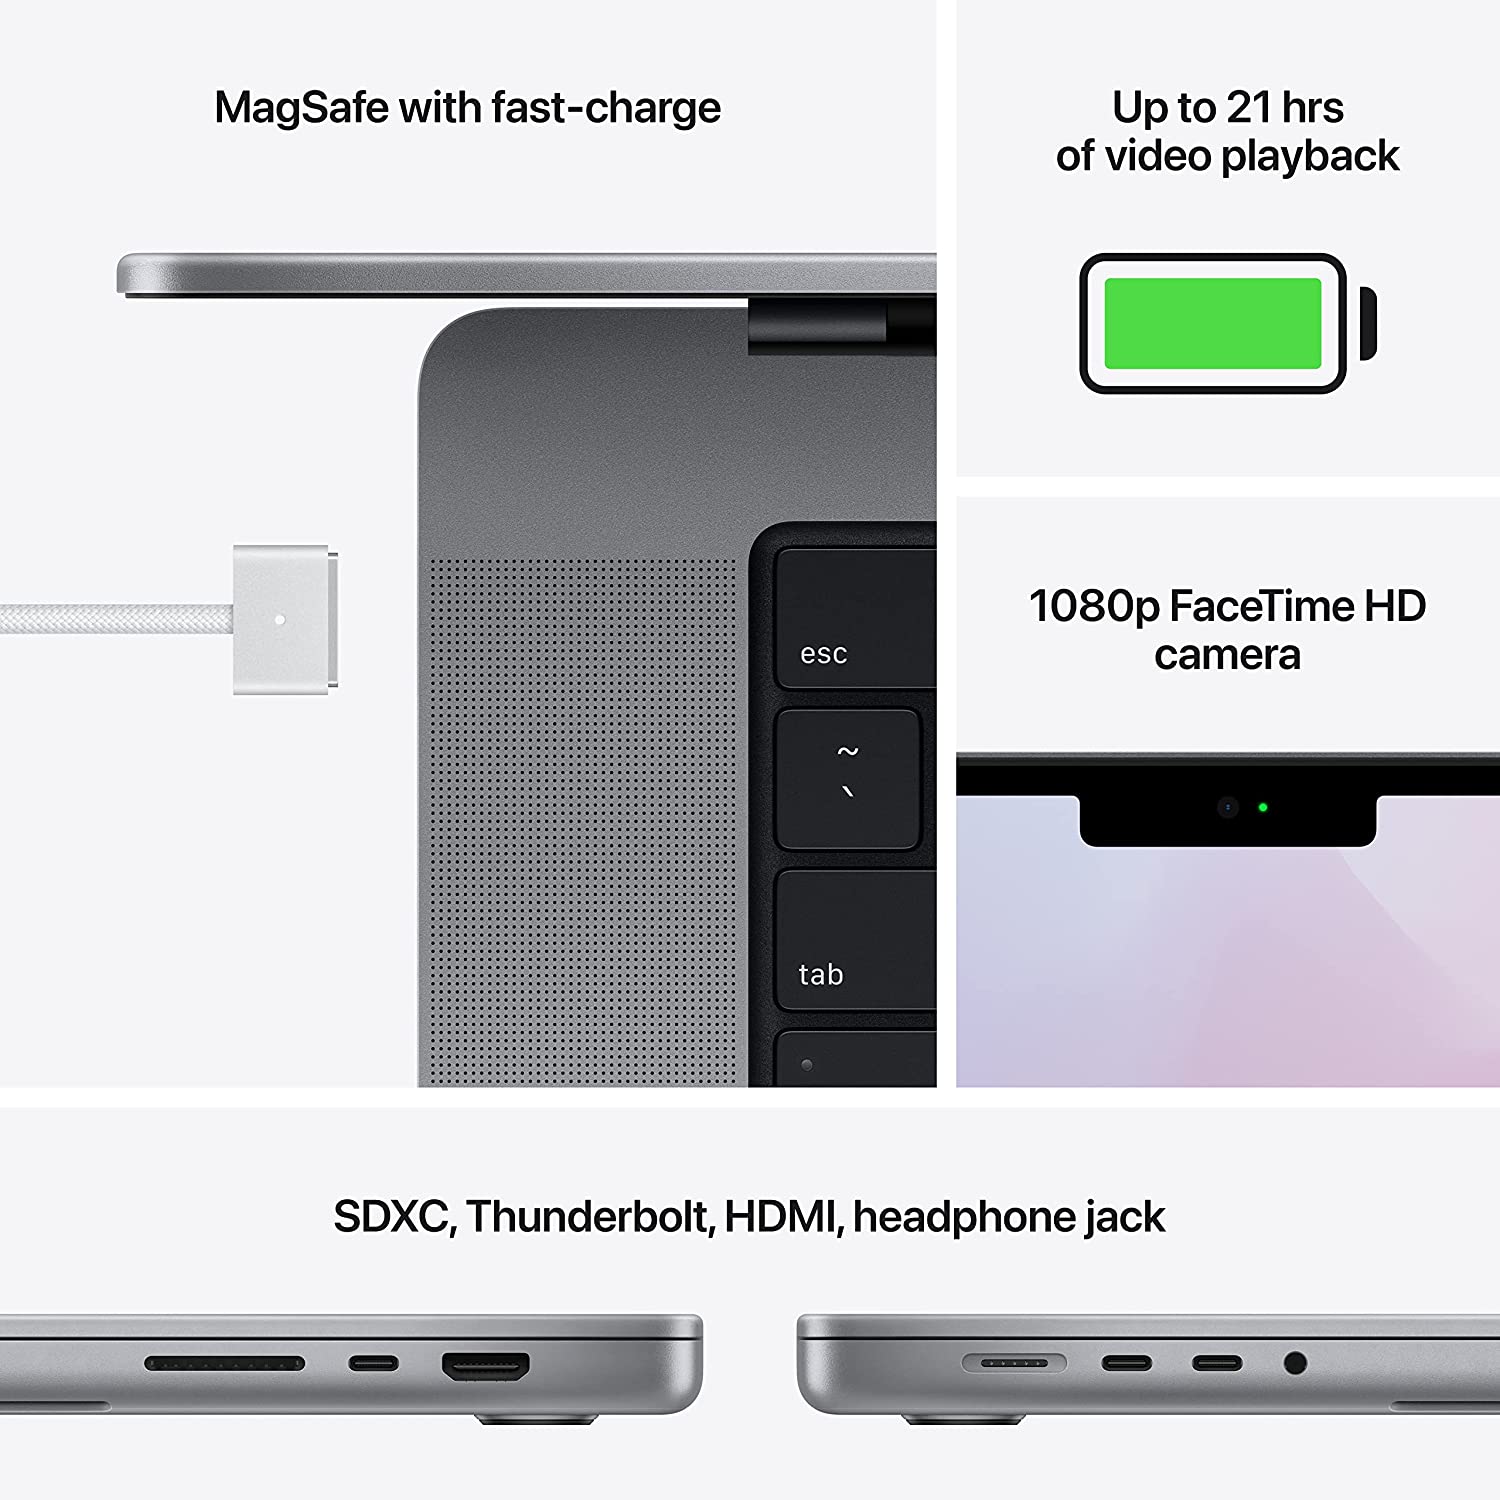 M1 MacBook Pro Details